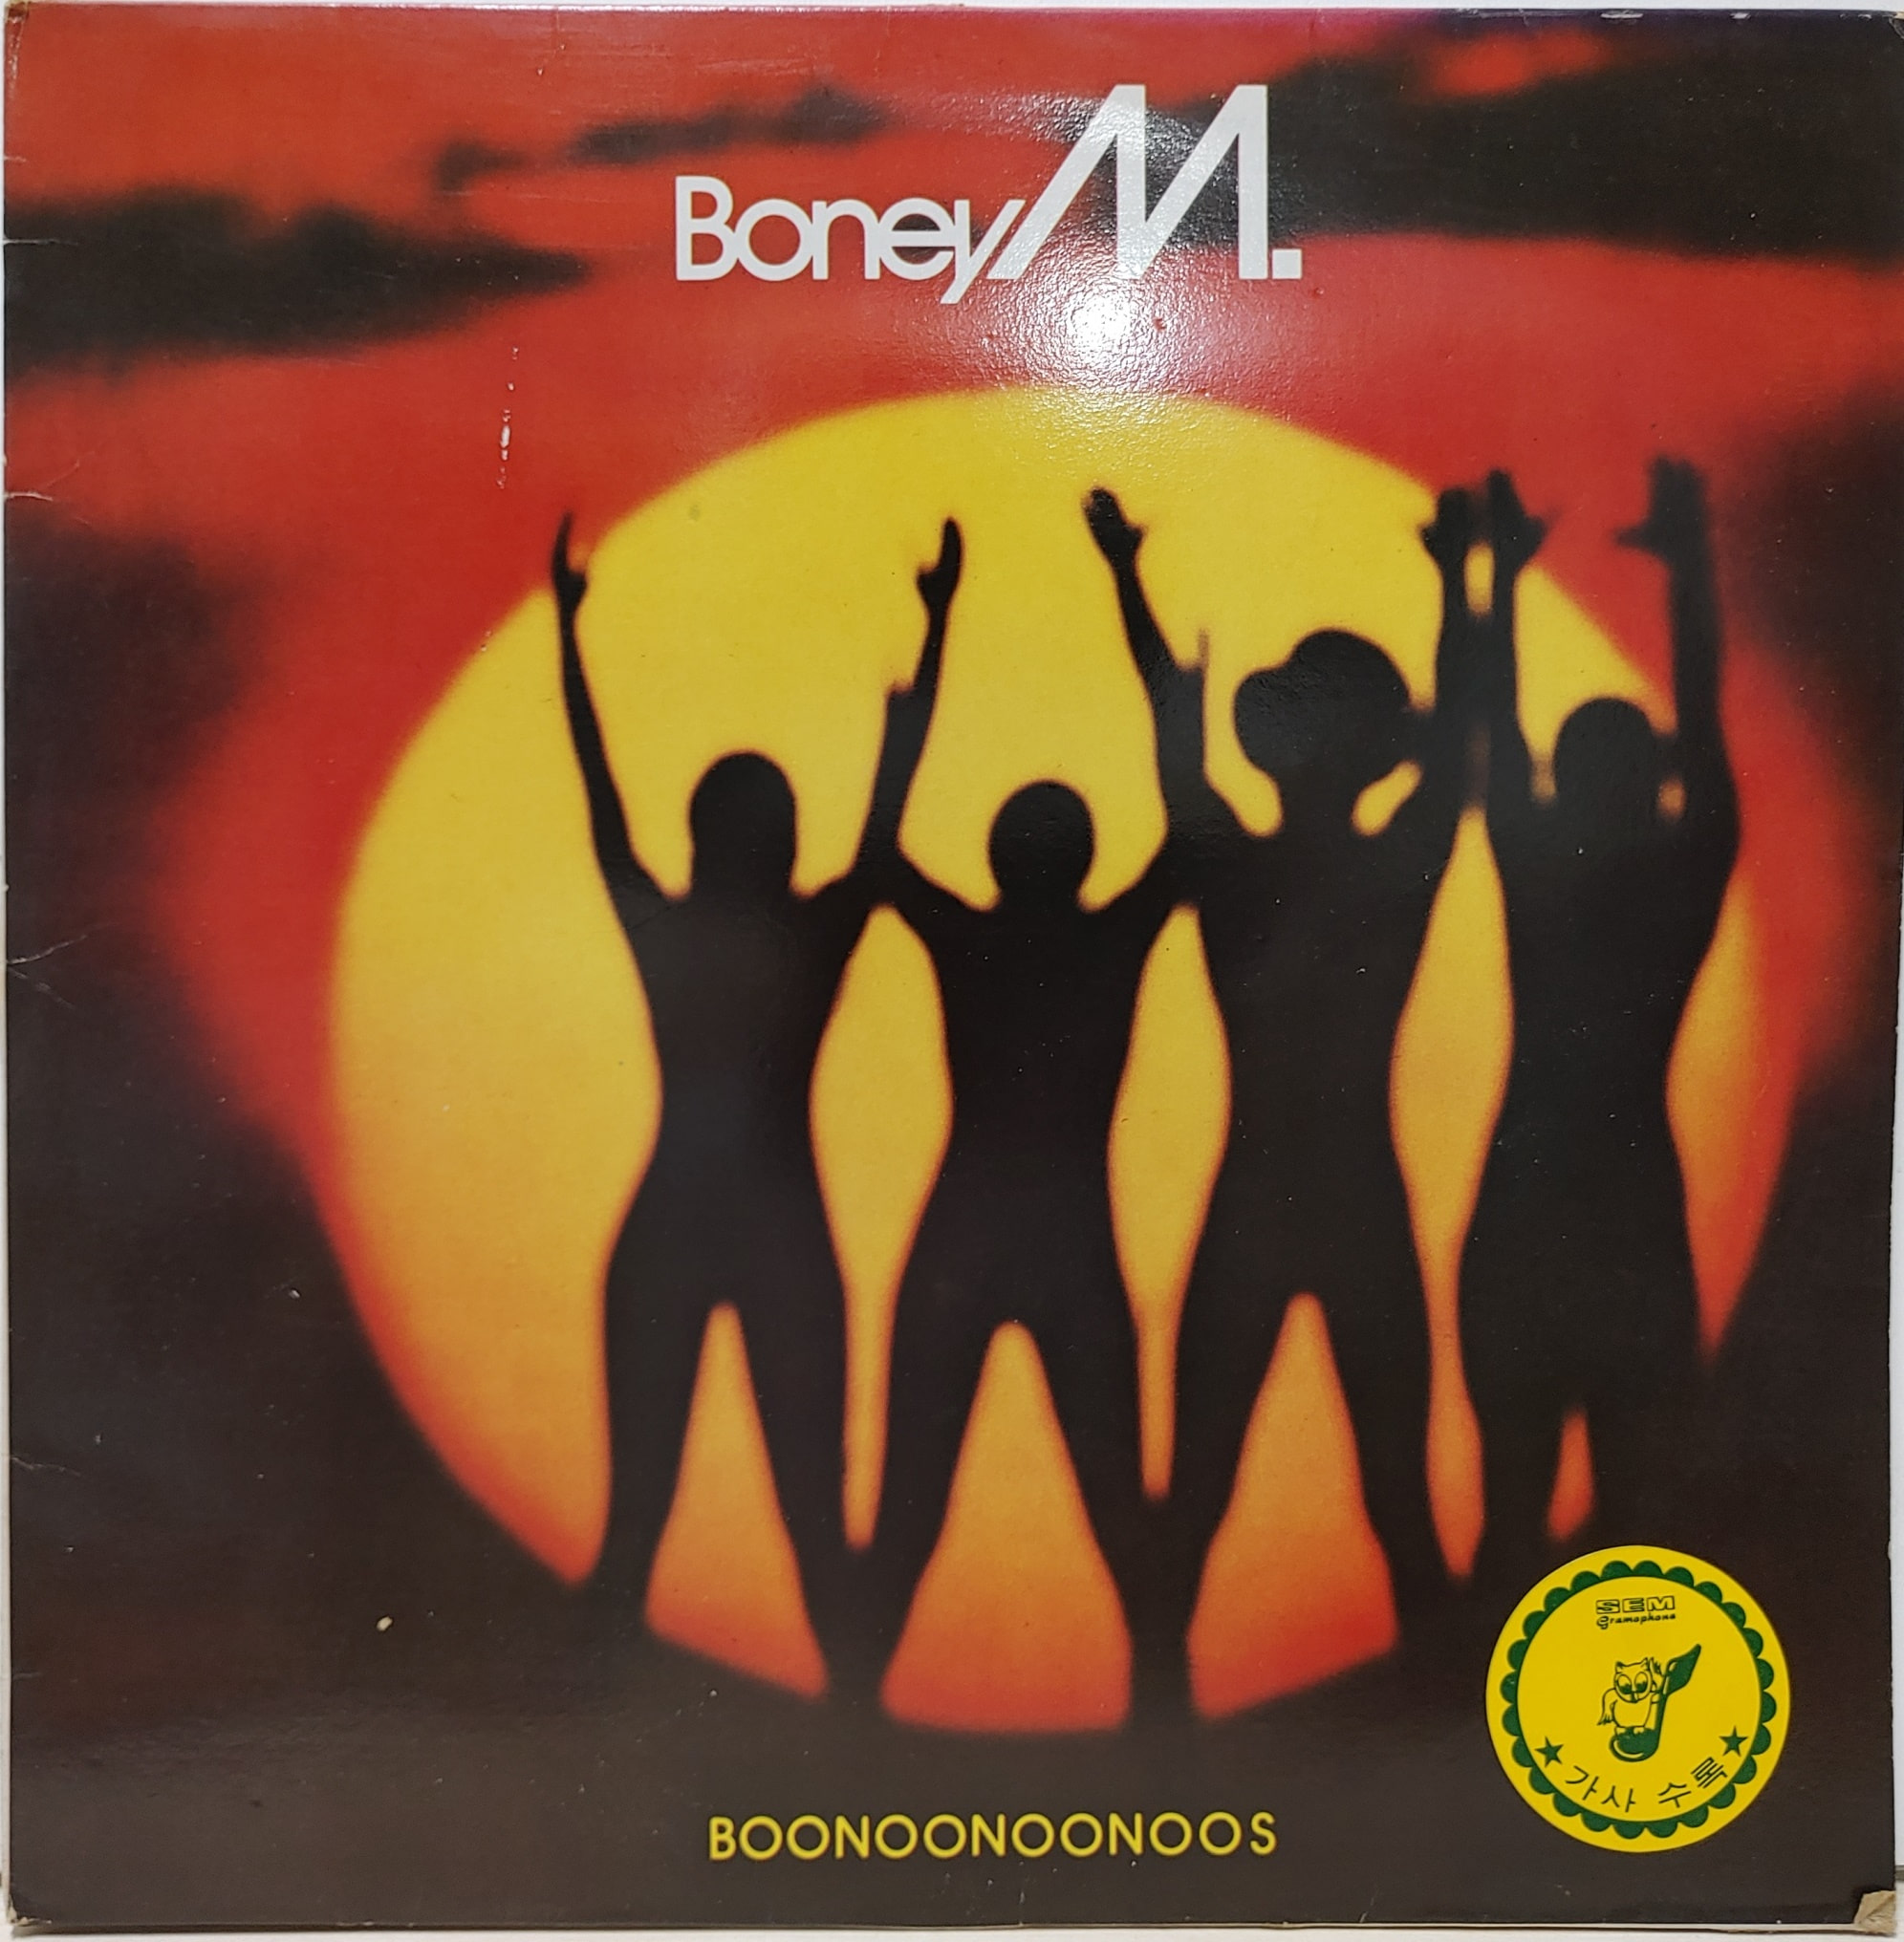 BONEY M / BOONOONOONOOS